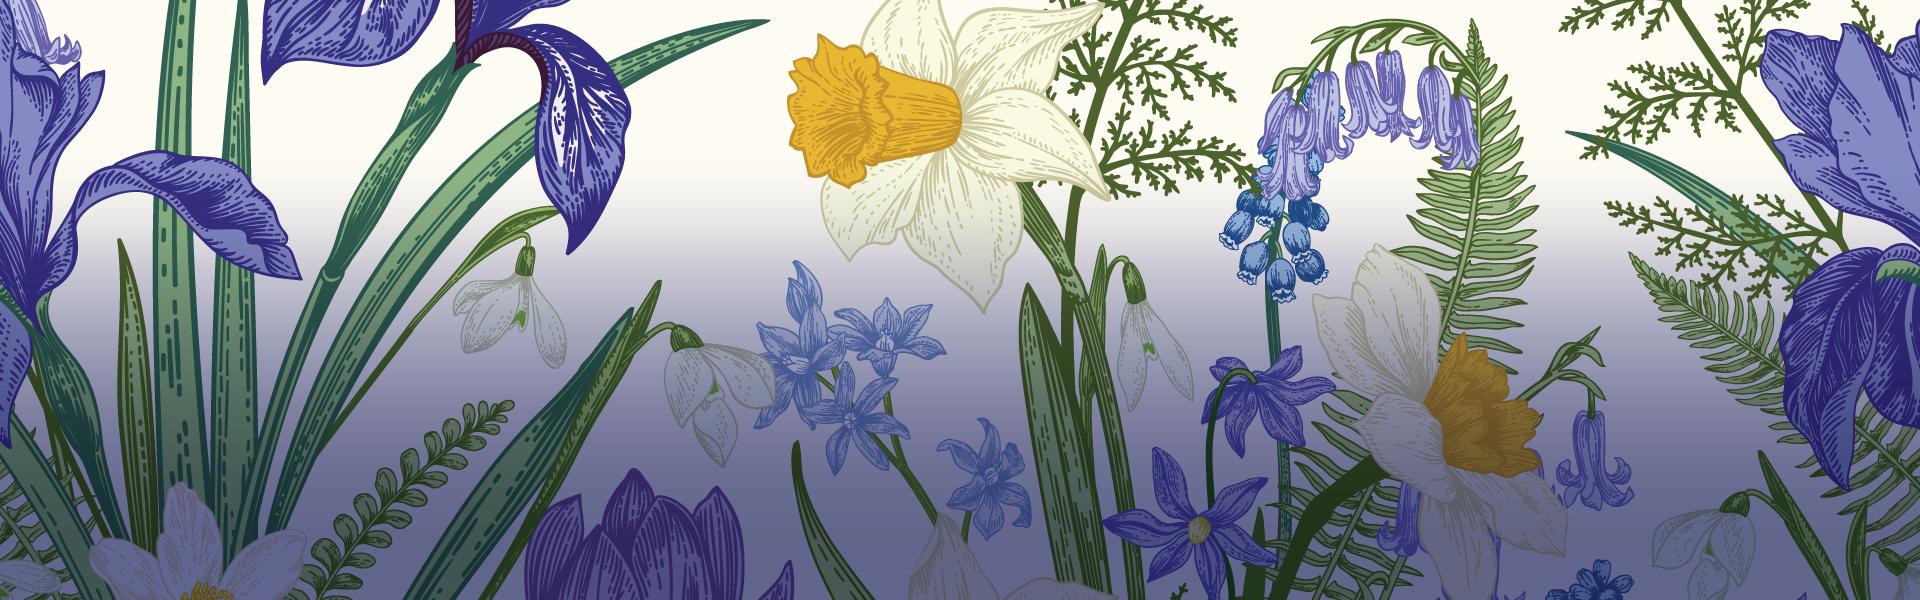 Spring flower banner image